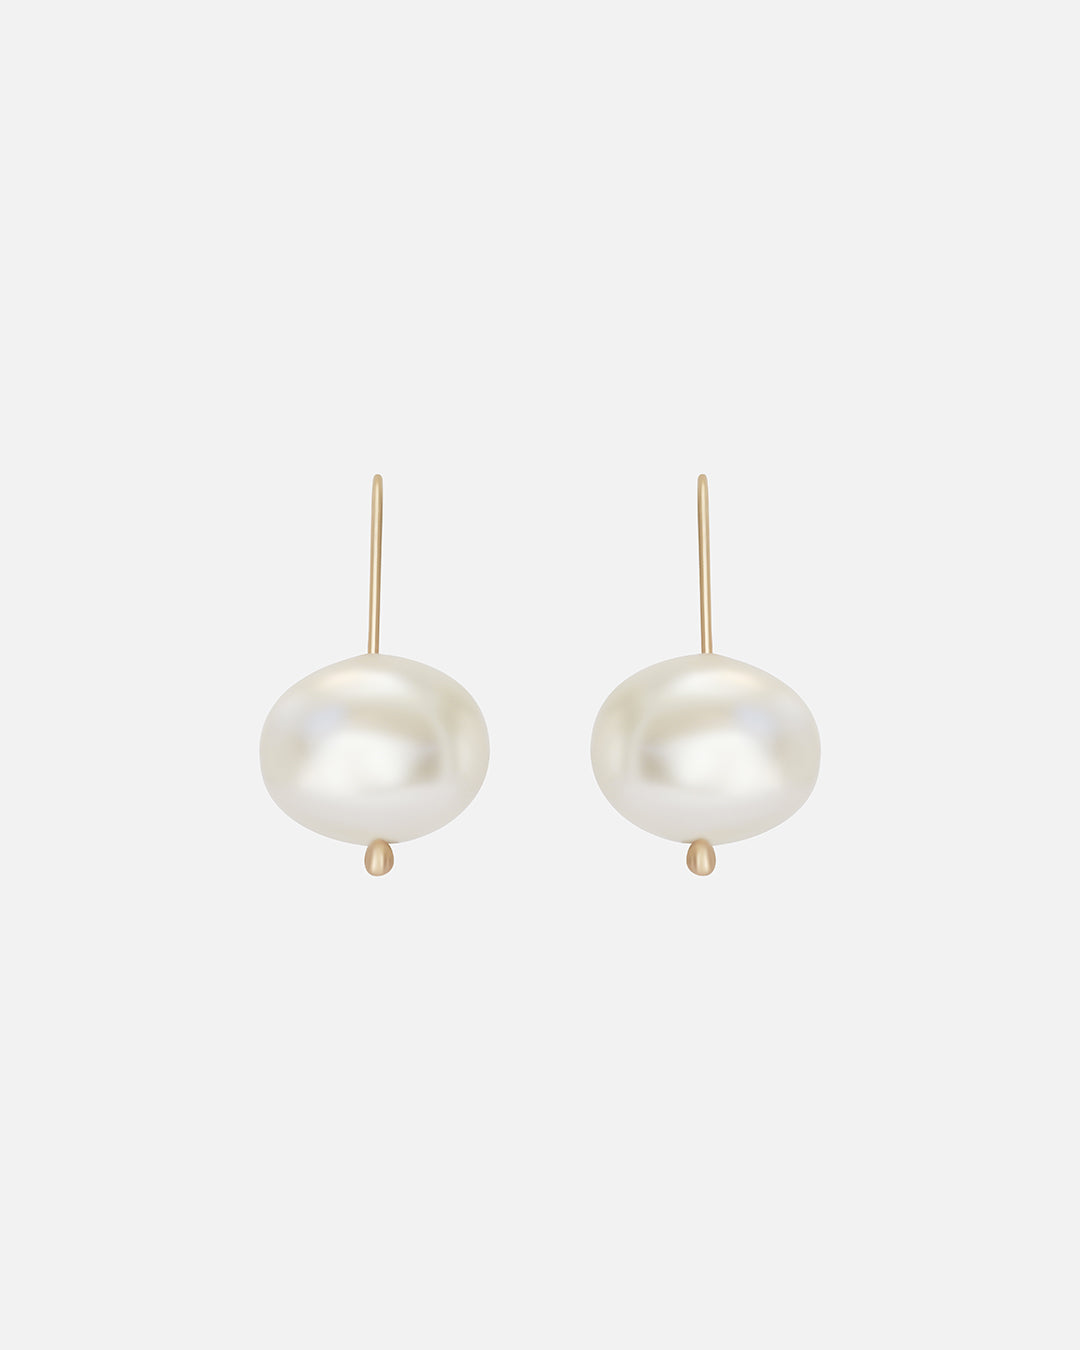 Pearl / Earrings By Tricia Kirkland